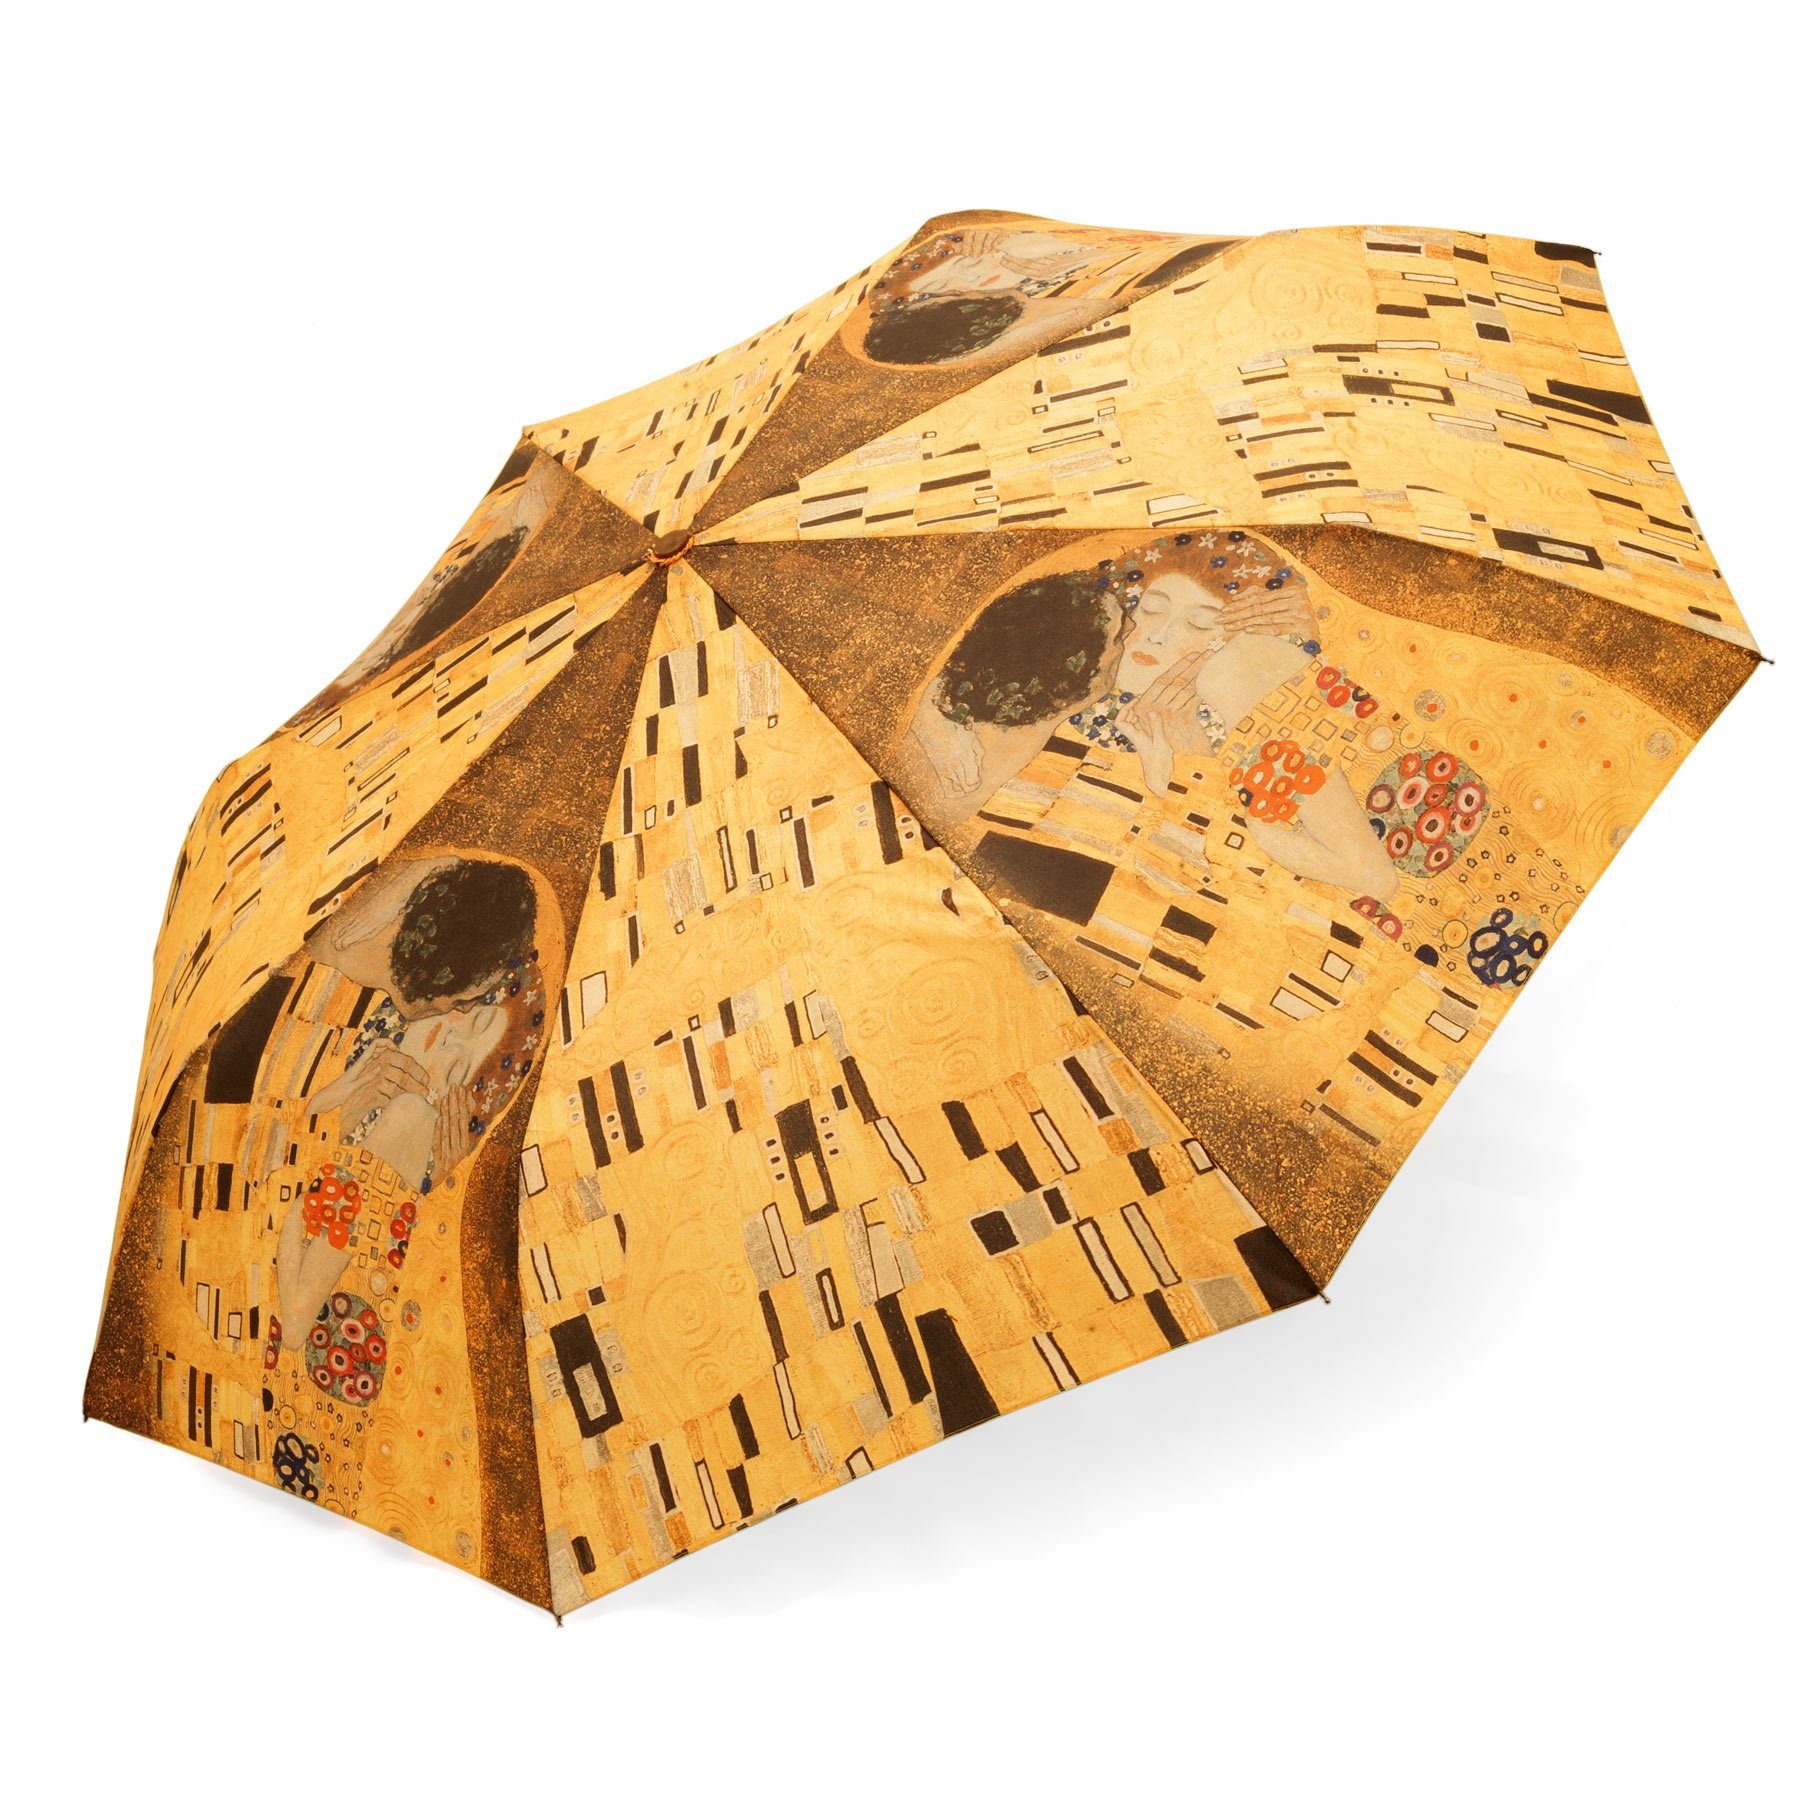 Damen Regenschirme ROSEMARIE SCHULZ Heidelberg Taschenregenschirm Taschenschirm Automatik Regenschirm Kunst Gustav Klimt Kuss, A